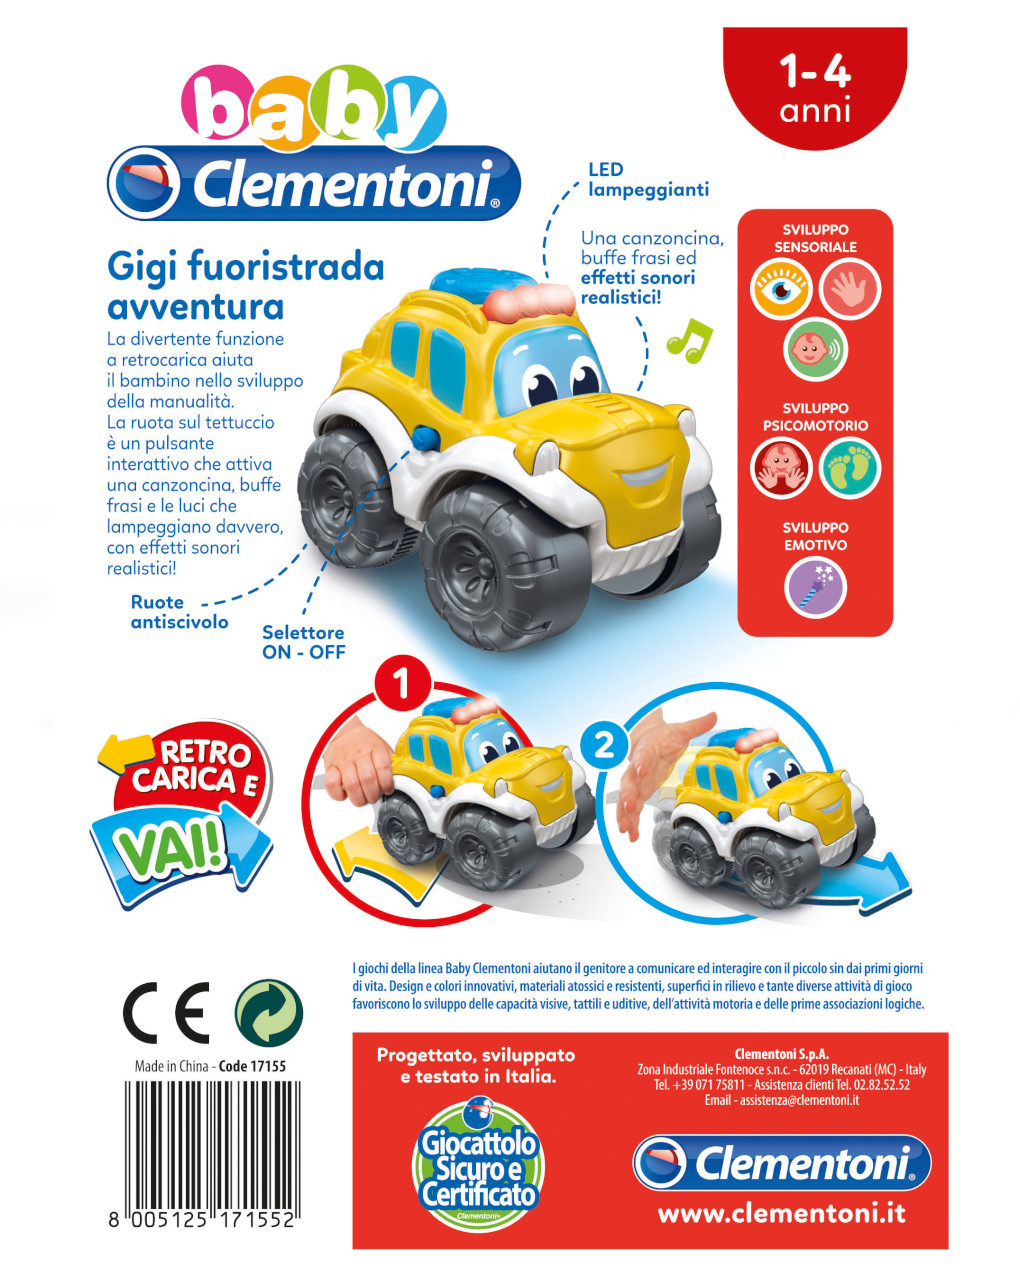 Gigi fuoristrada avventura 1/4 anni - clementoni - Baby Clementoni